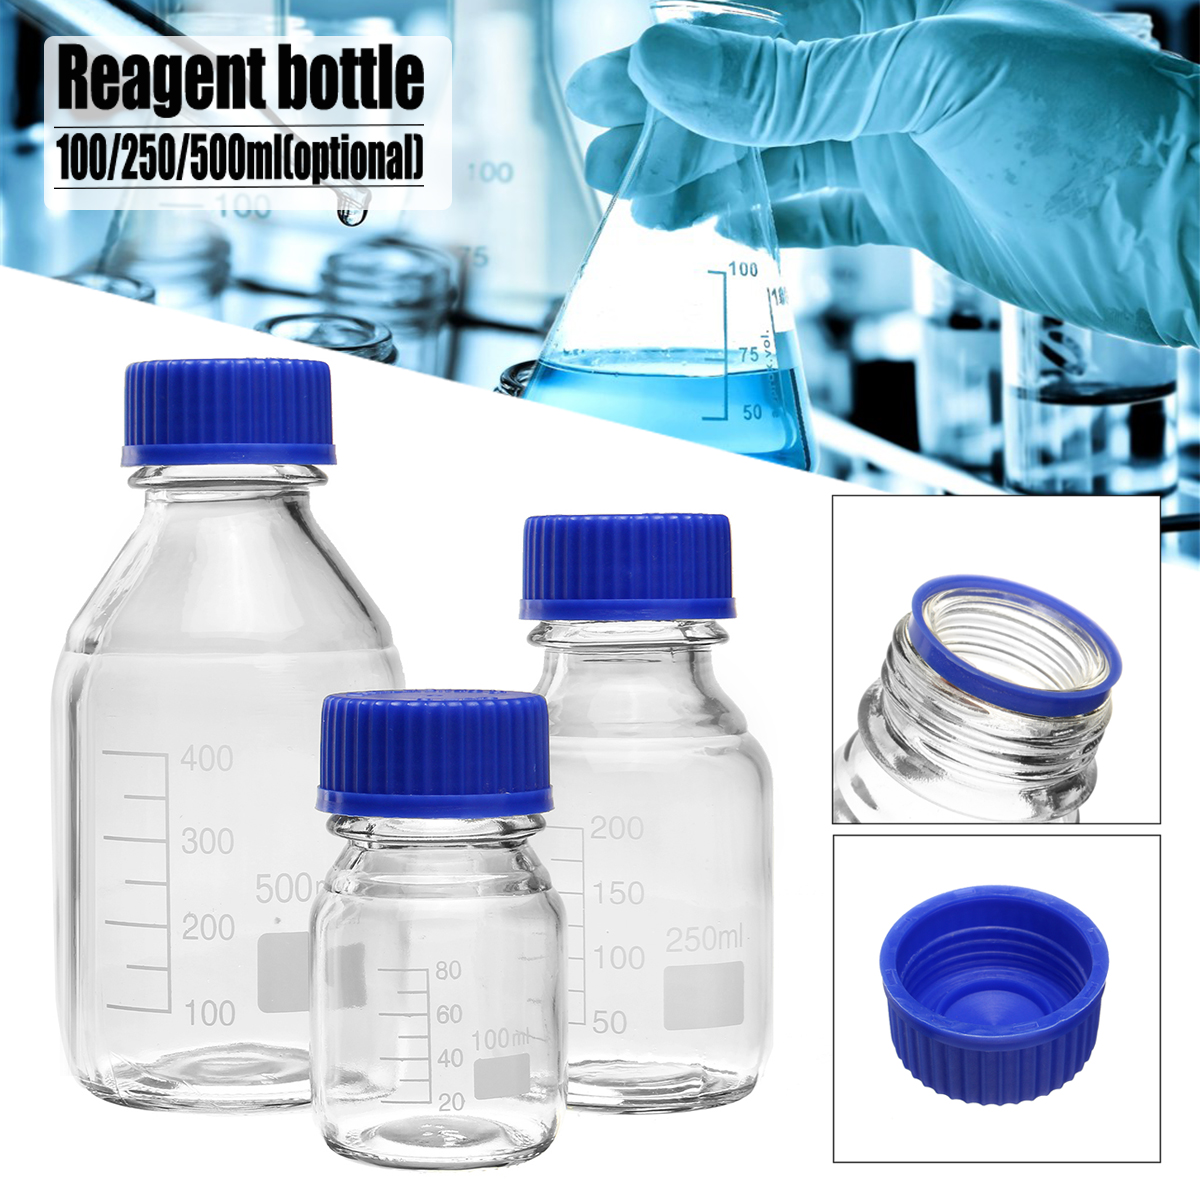 100250500mL-Borosilicate-Glass-Clear-Reagent-Bottle-Blue-Screw-Cap-Lab-Storage-Bottle-1350884-8